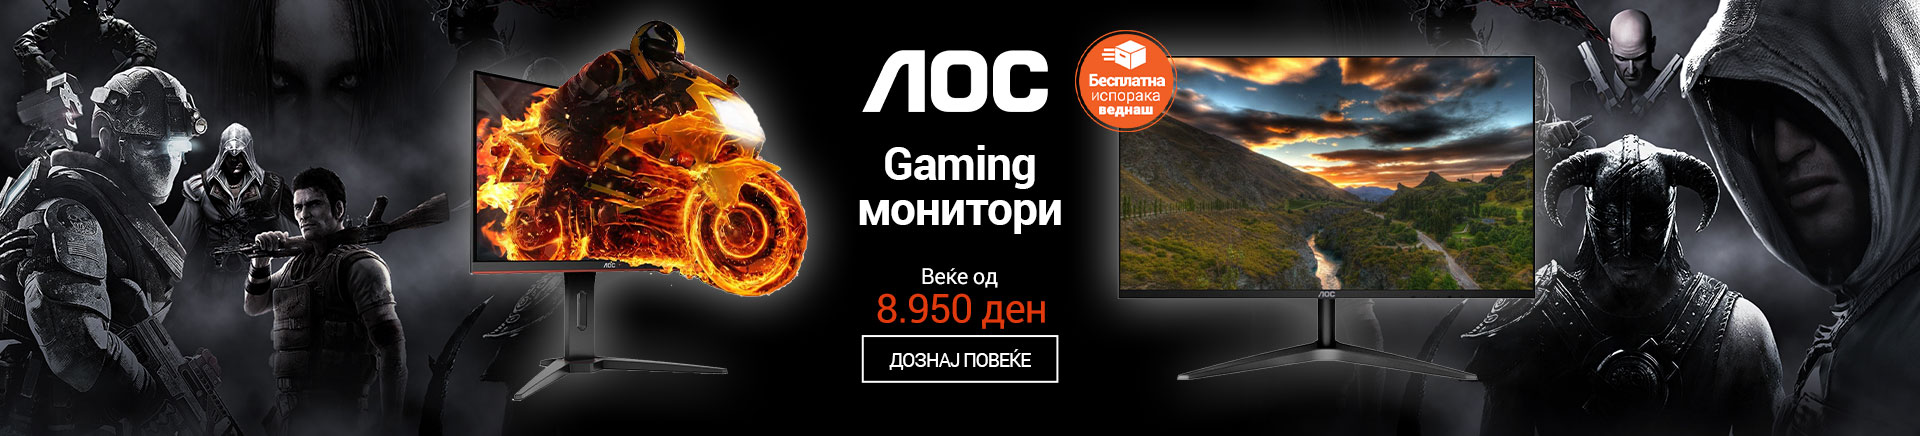 MK AOC Gaming monitori TABLET 768 X 436.jpg